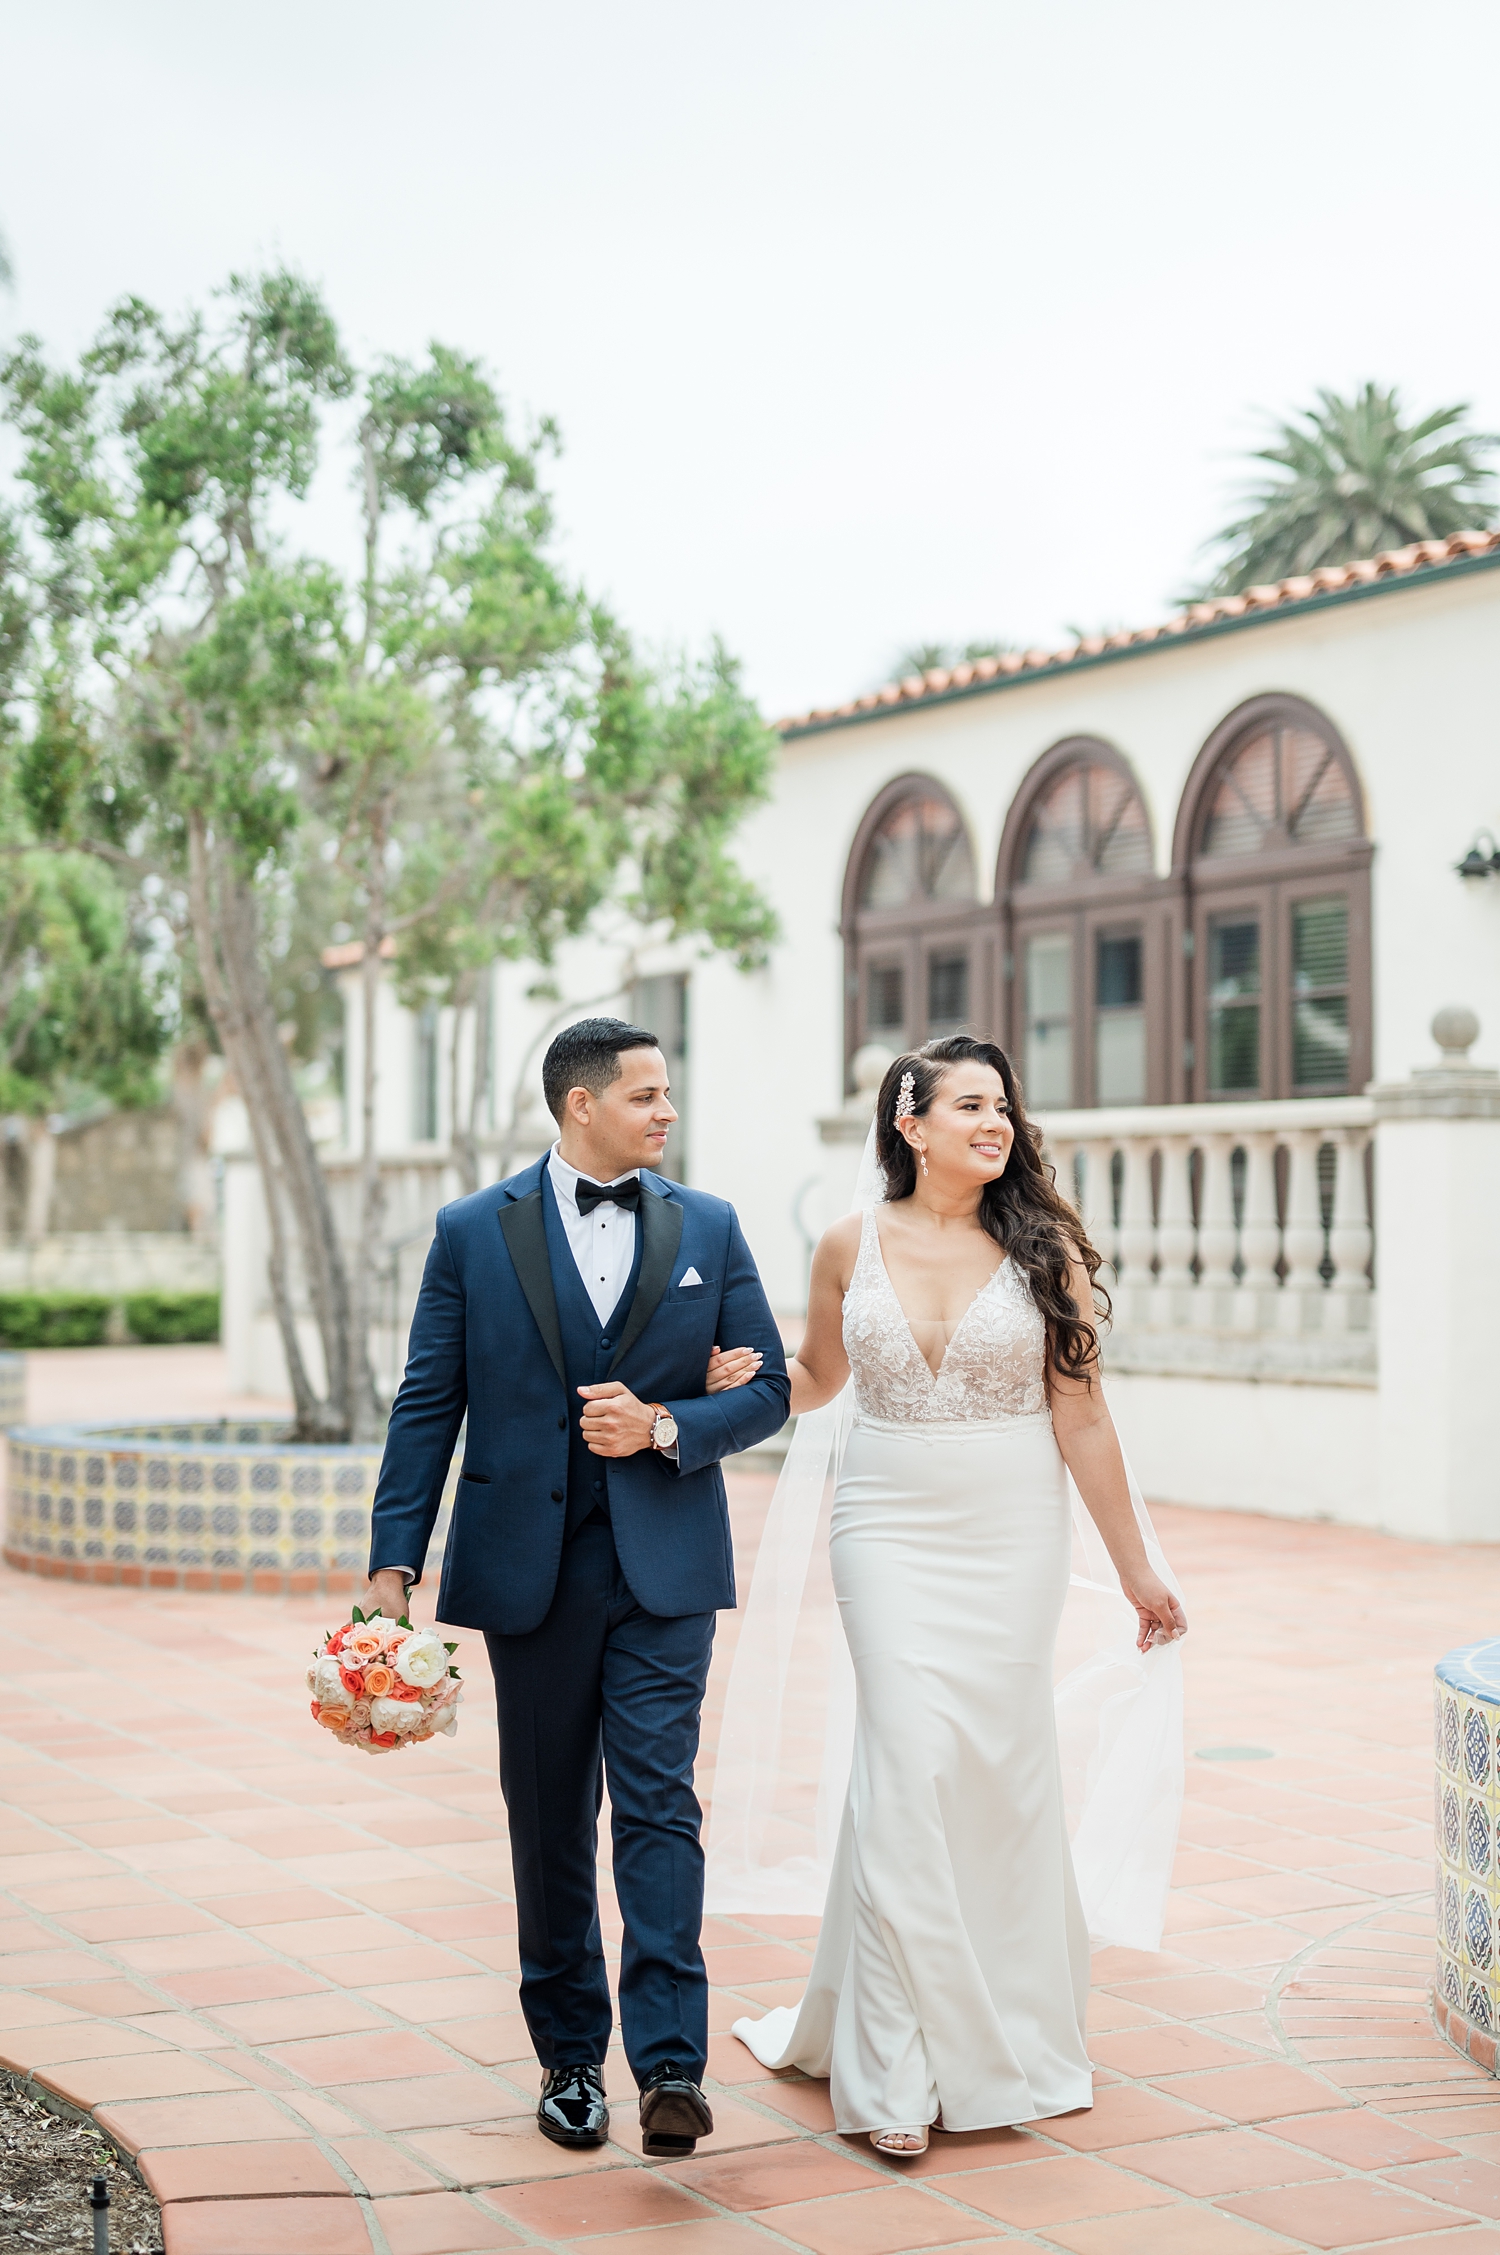 The Neighborhood Church | Palos Verdes Estates Wedding Photographer | Rainy wedding day | beach wedding -56.jpg